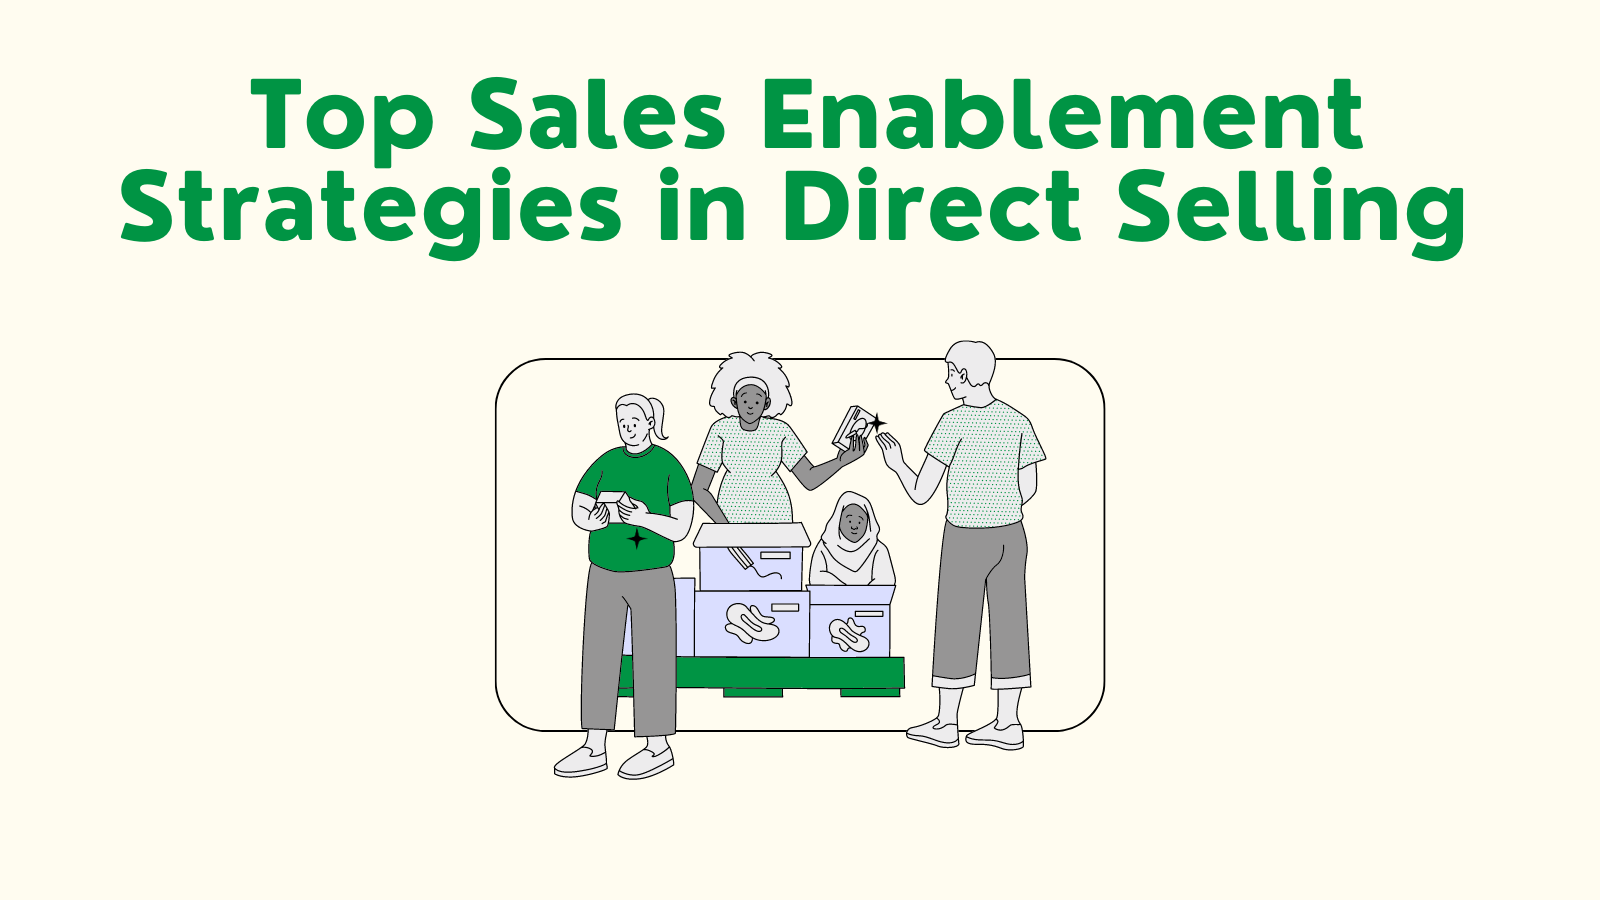 Top Sales Enablement Strategies in Direct Selling